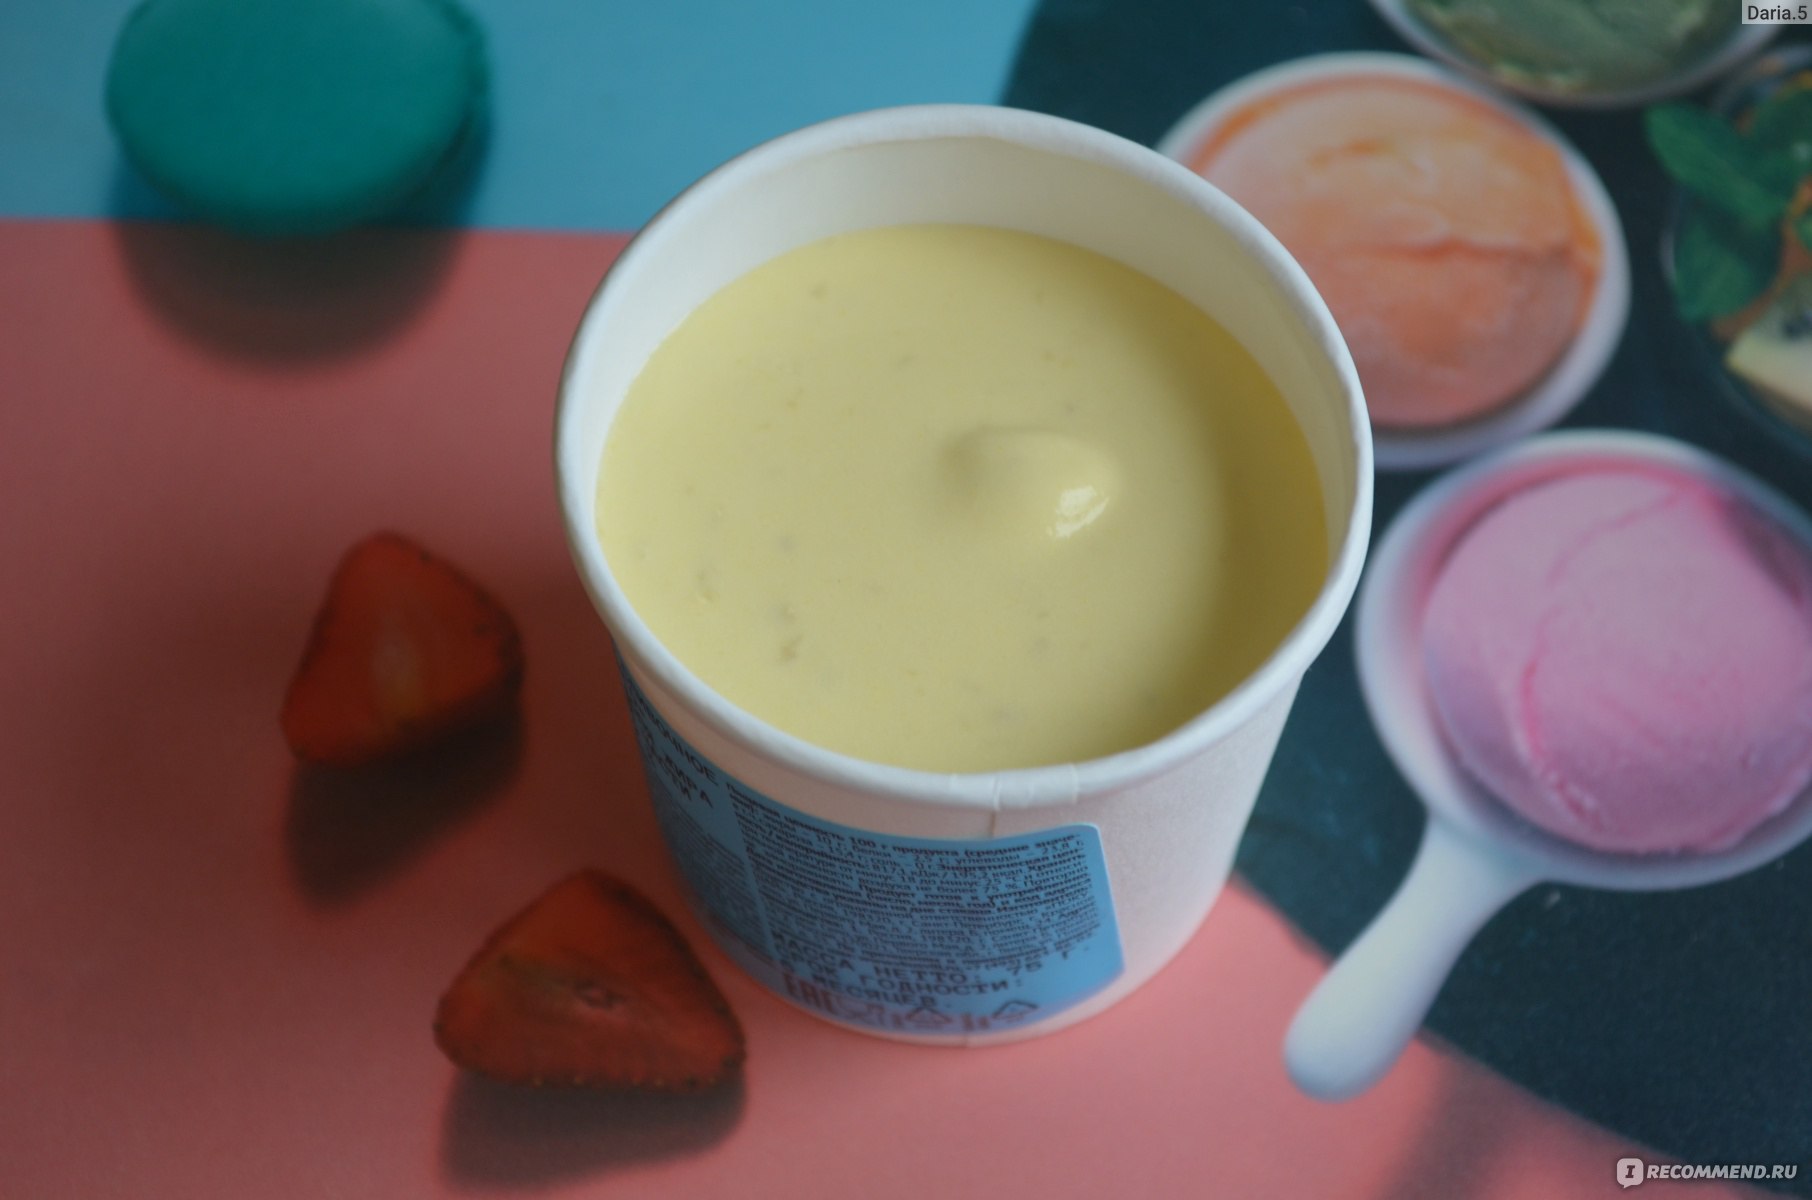 Мороженое ВкусВилл / Избёнка сливочное «Кокос-манго» фото